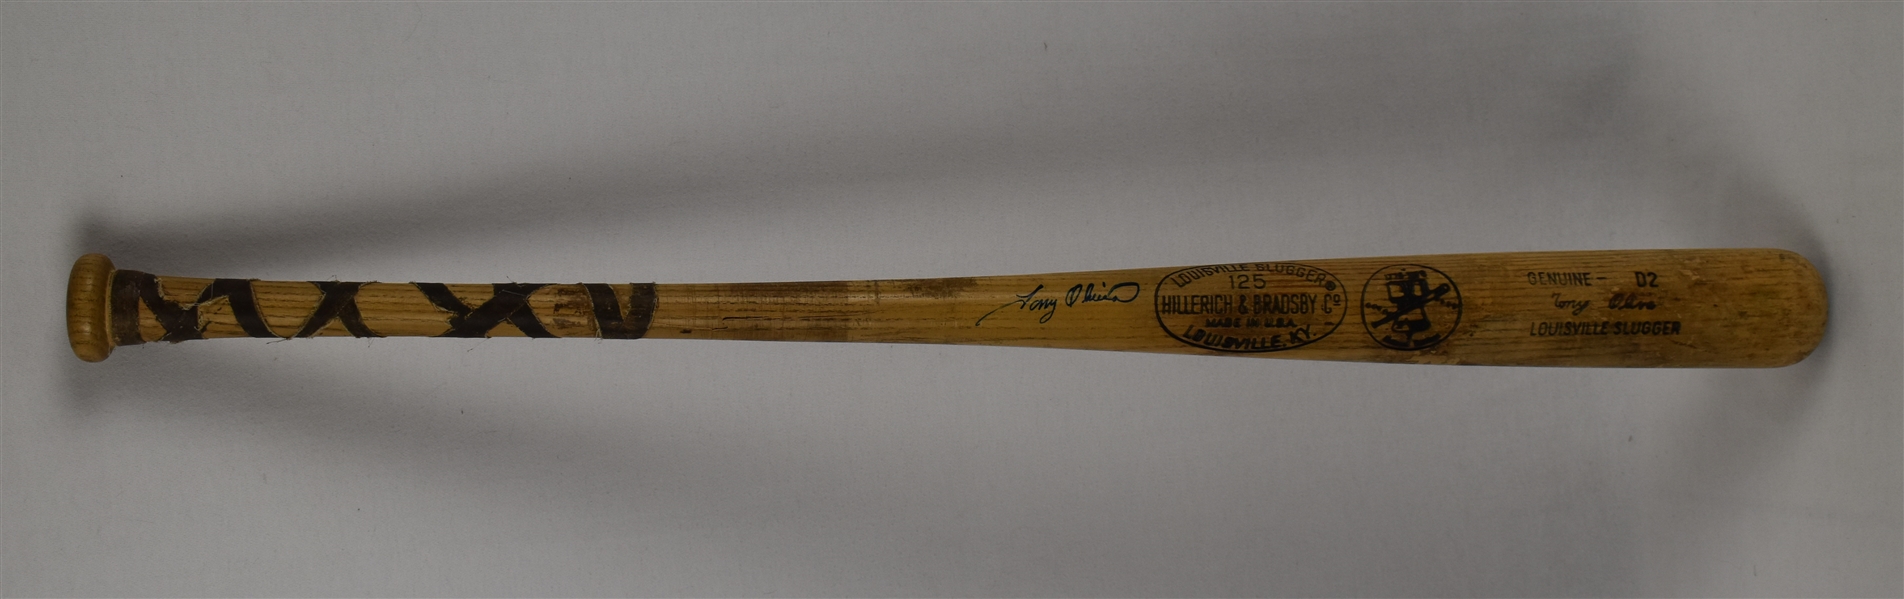 Tony Oliva RARE 1976 Minnesota Twins Bicentennial Game Used & Autographed Bat Graded PSA/DNA 9 